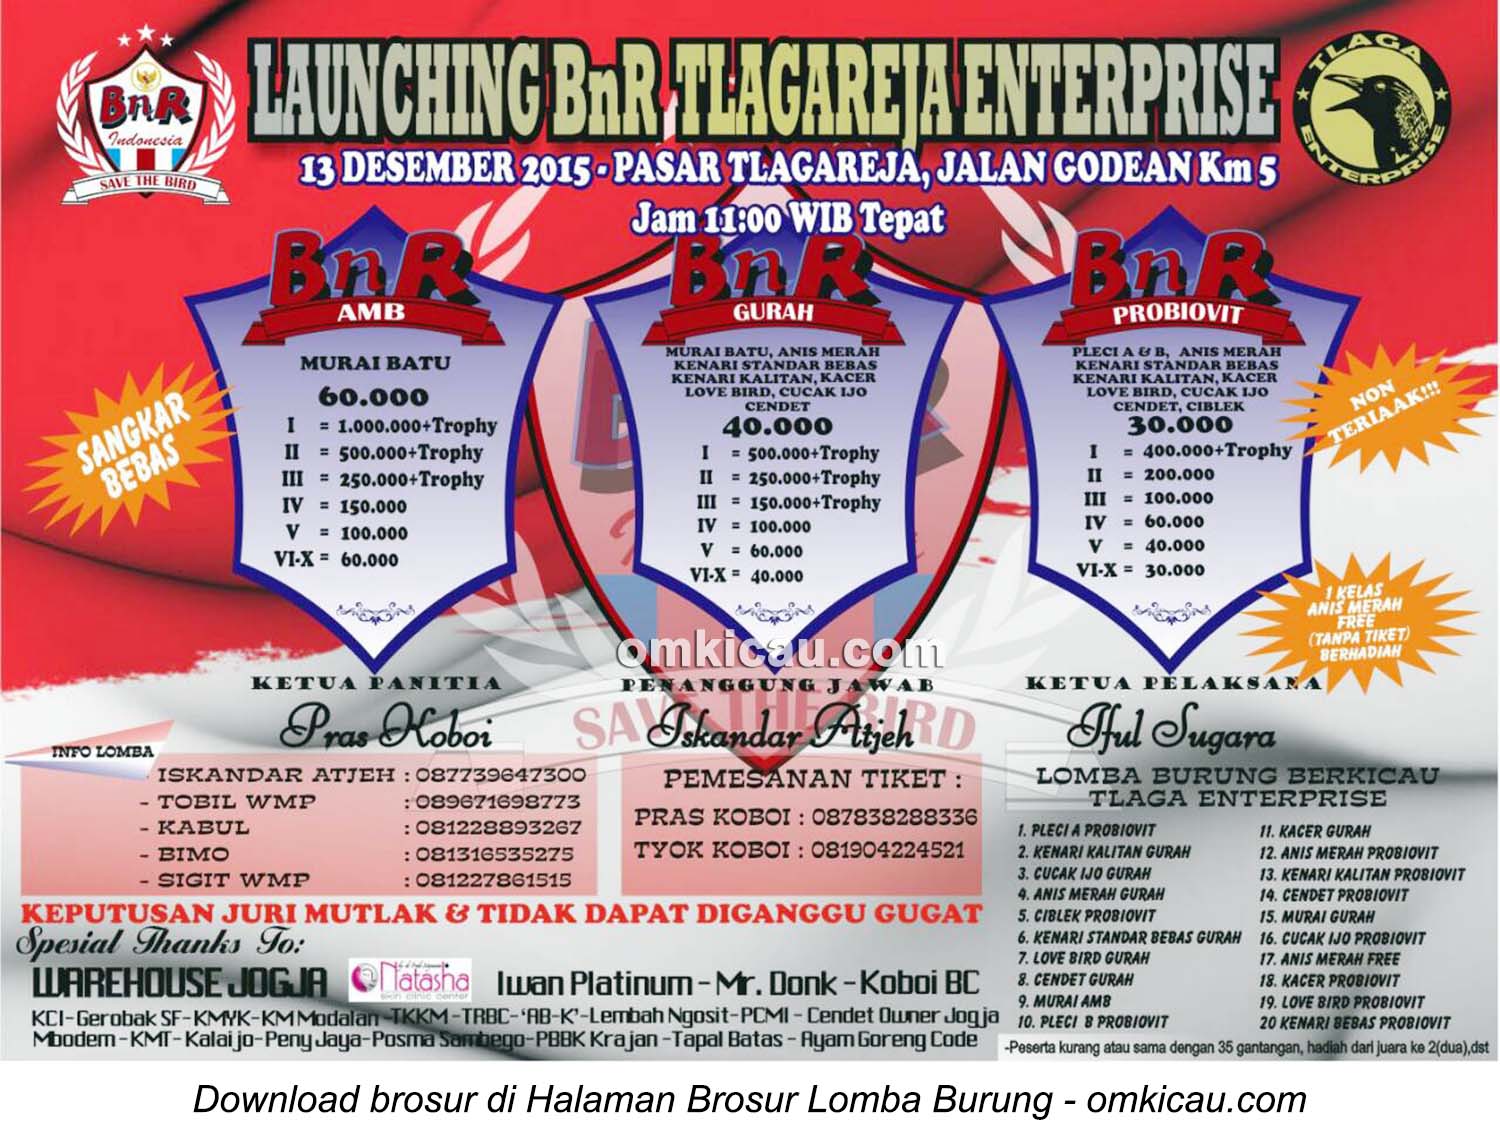 Brosur Lomba Burung Berkicau Launching BnR Tlagareja Enterprise, Jogja, 13 Desember 2015